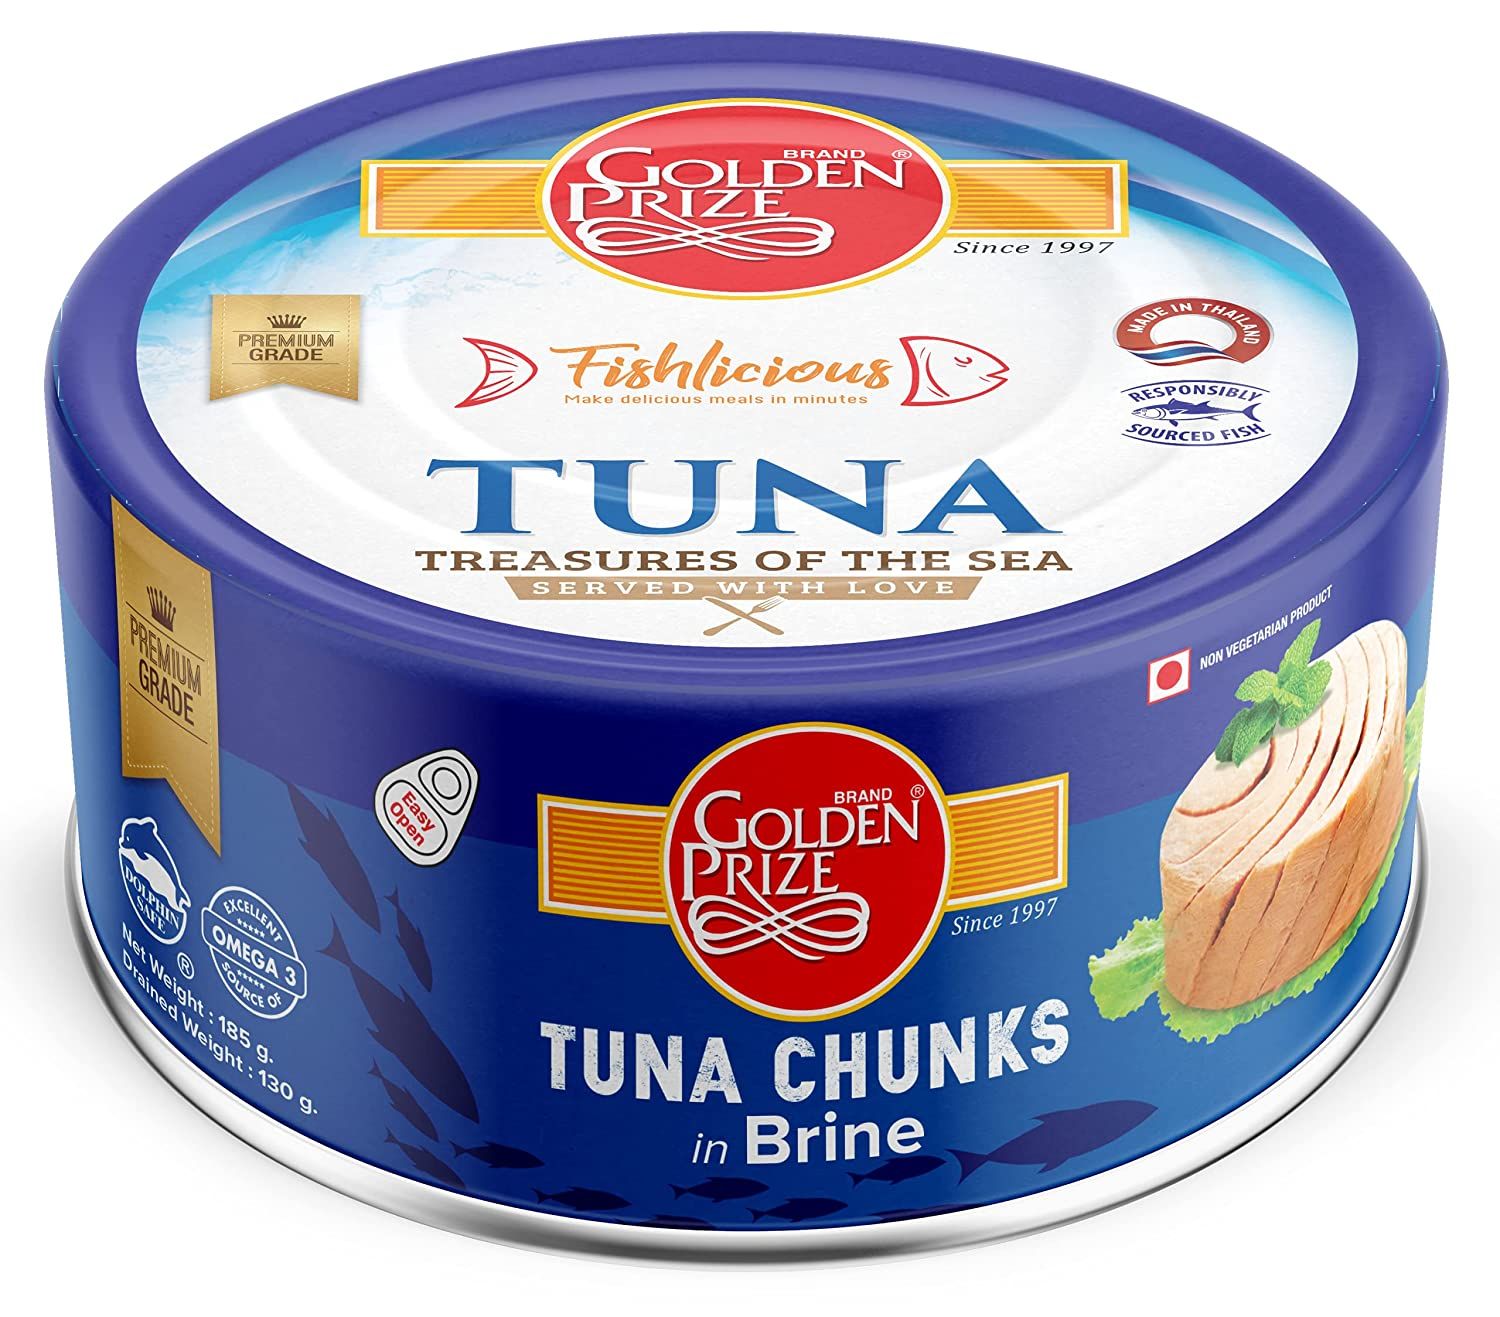 Golden Prize Tuna Chunks in Brine Image